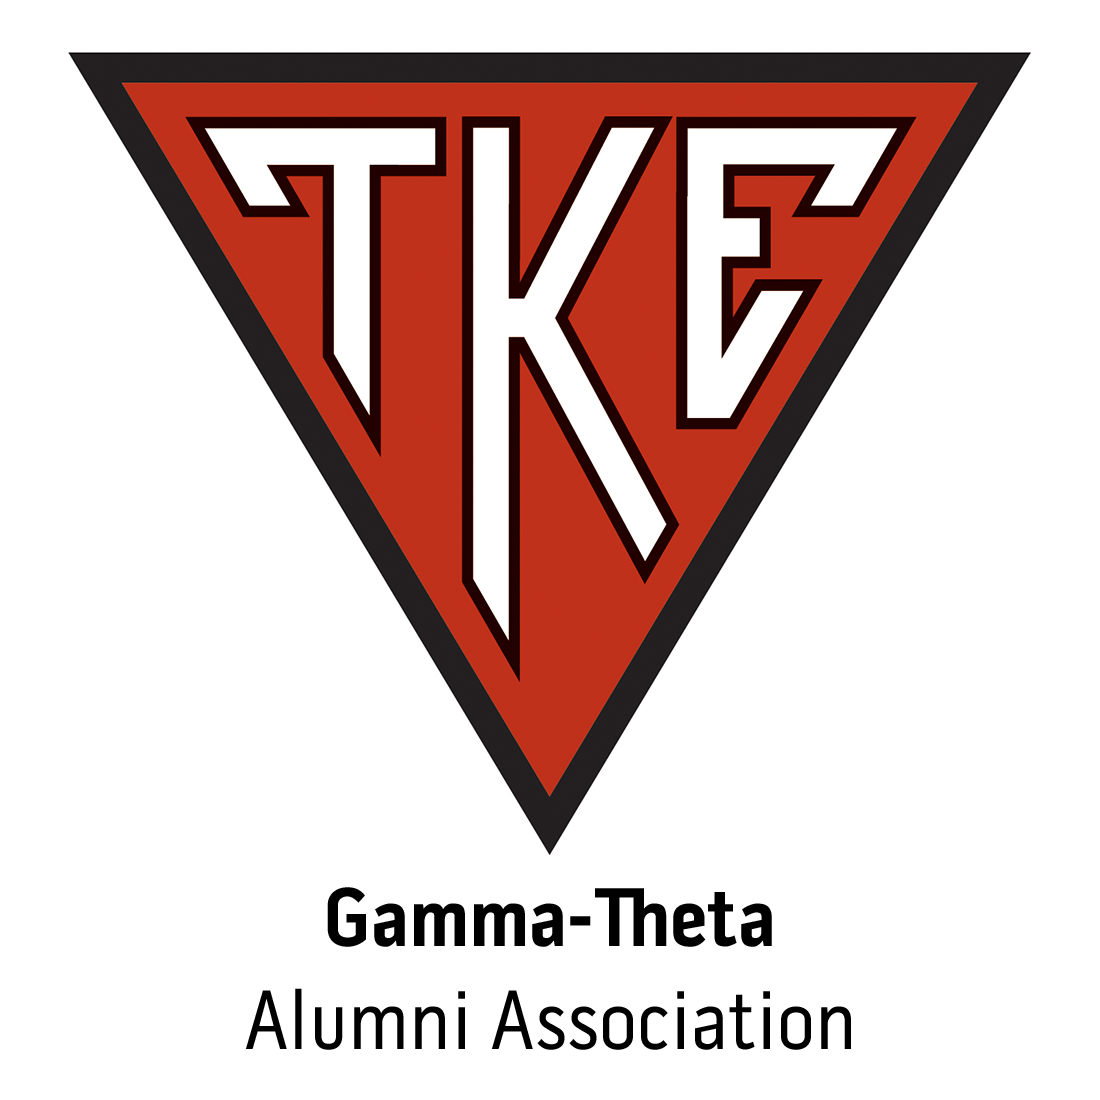 Gamma-Theta Alumni Association at University of Florida